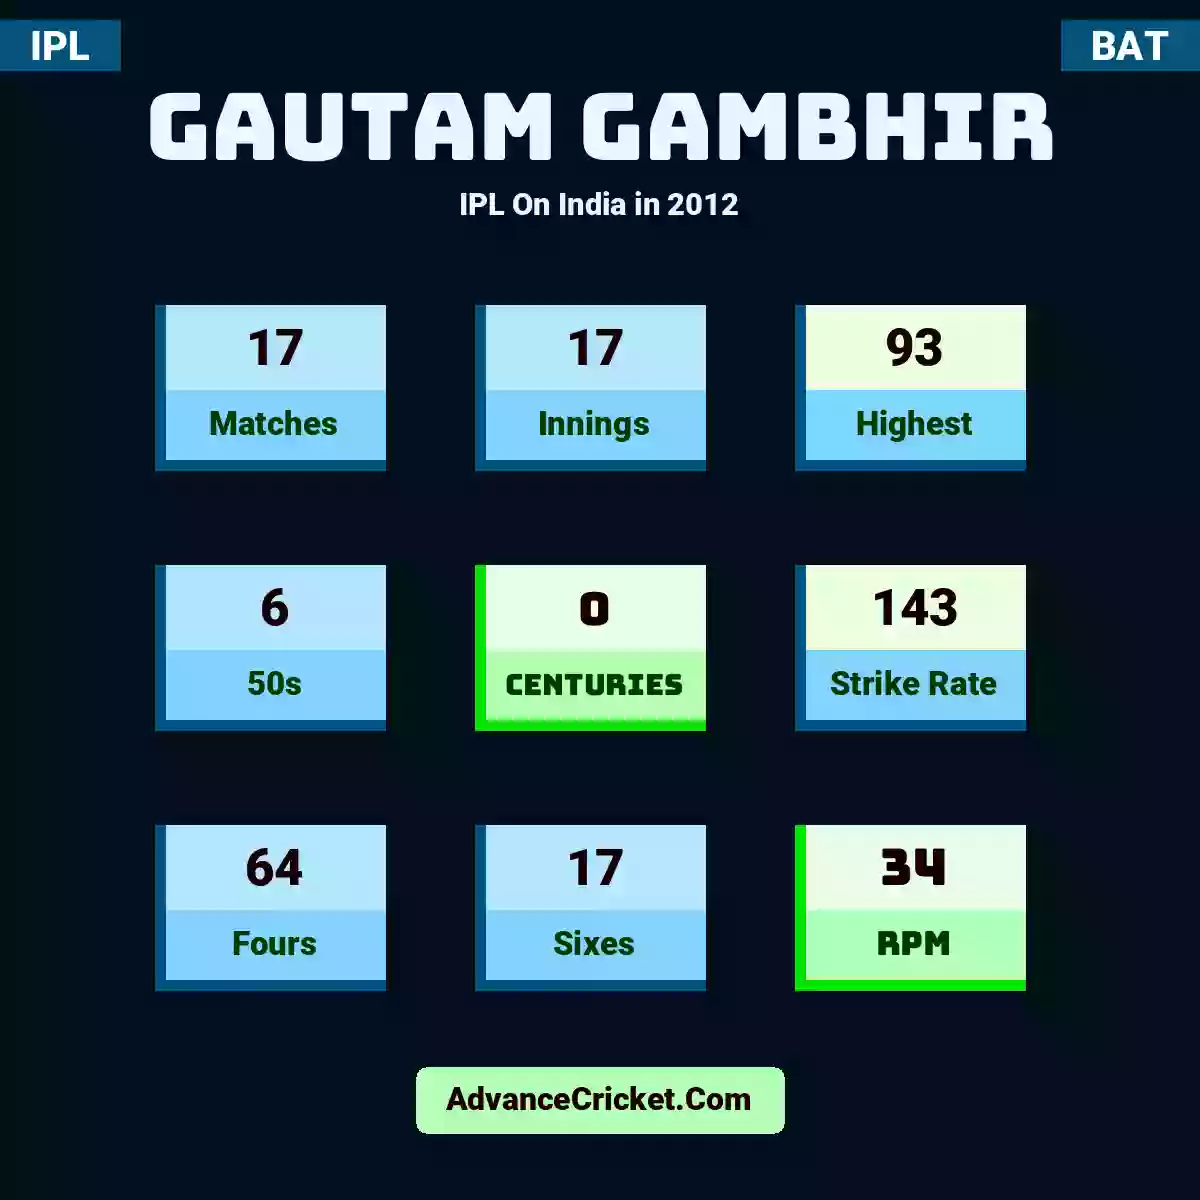 Gautam Gambhir IPL  On India in 2012, Gautam Gambhir played 17 matches, scored 93 runs as highest, 6 half-centuries, and 0 centuries, with a strike rate of 143. G.Gambhir hit 64 fours and 17 sixes, with an RPM of 34.